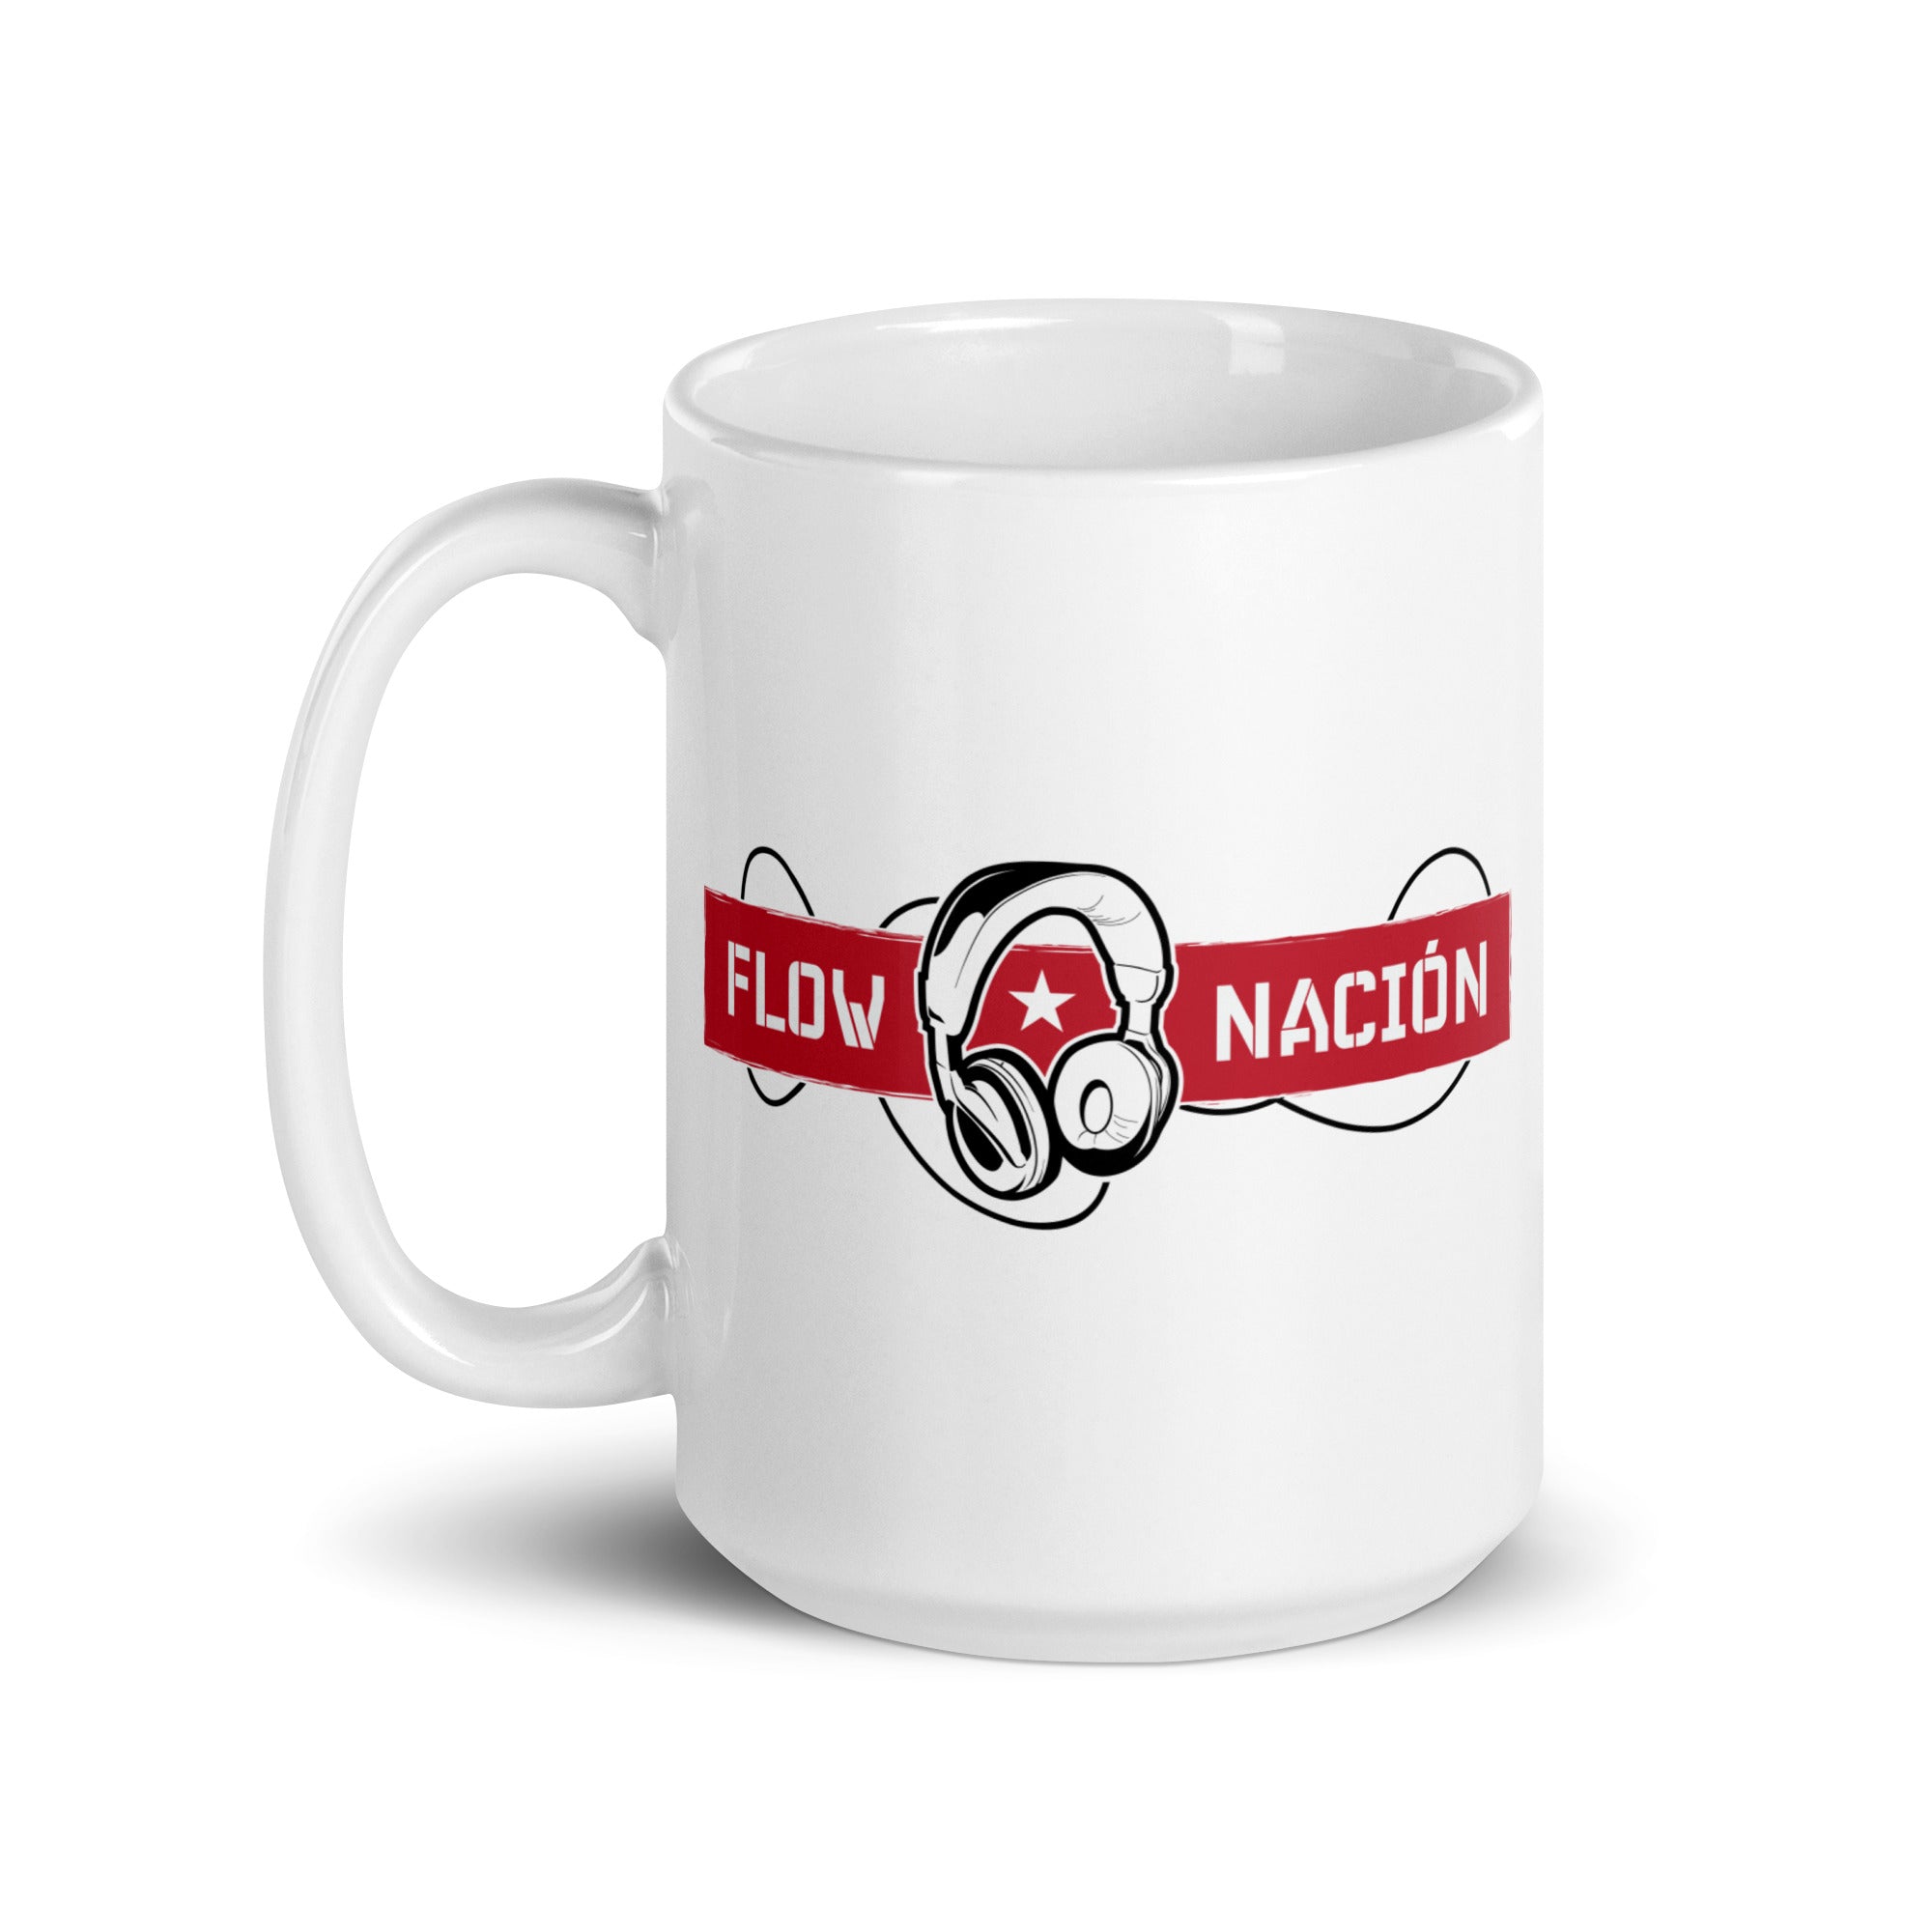 Flow Nacion: Mug